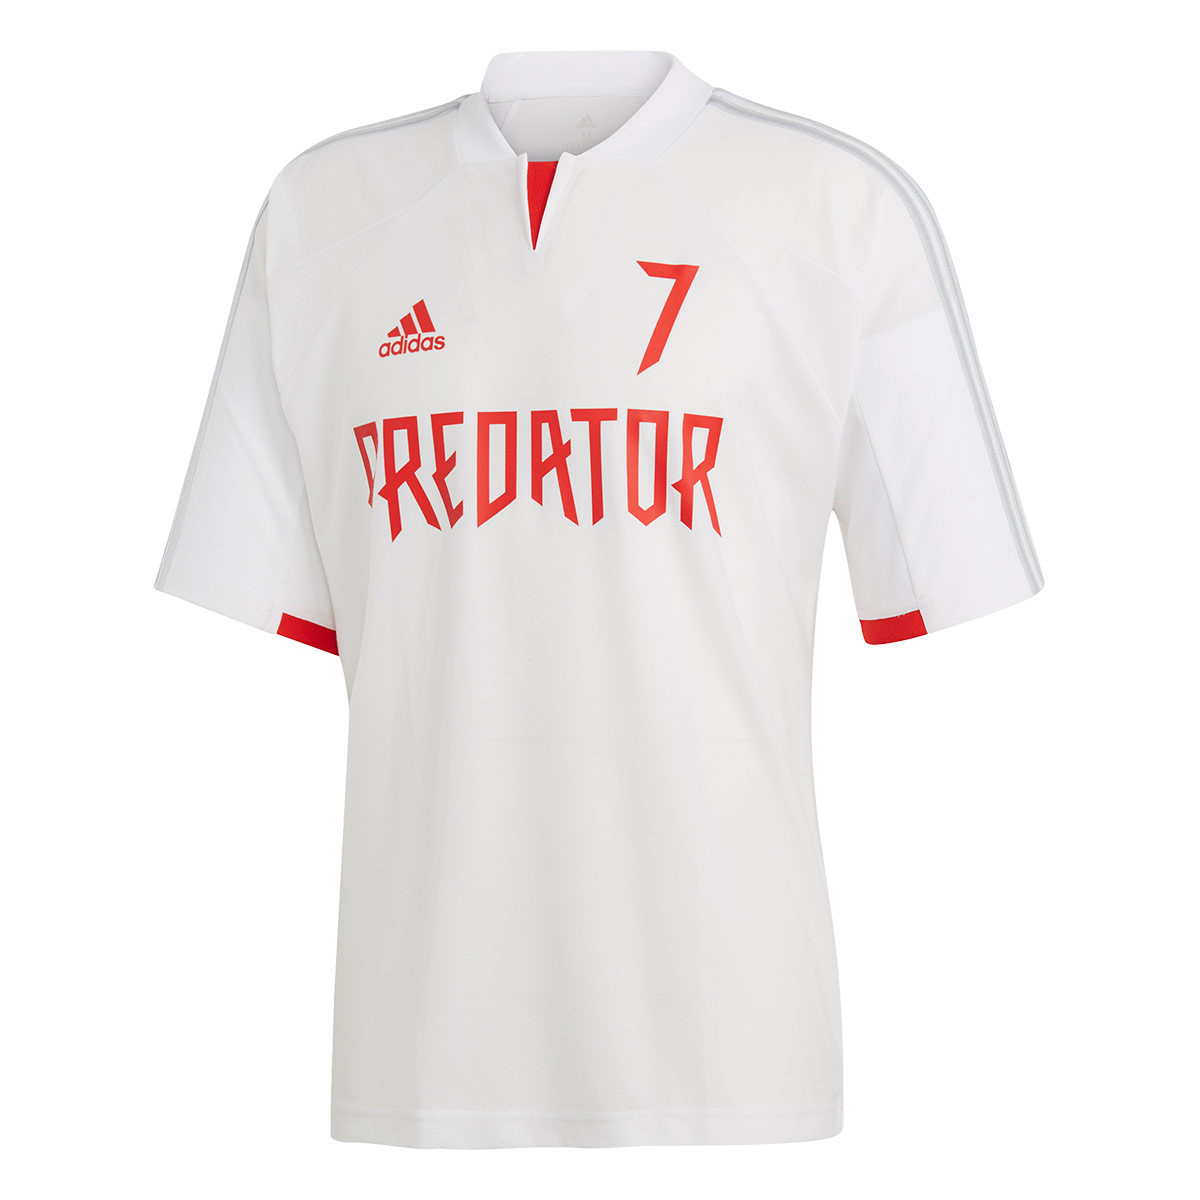 Jersey adidas Predator DB White-red - Football store Fútbol Emotion